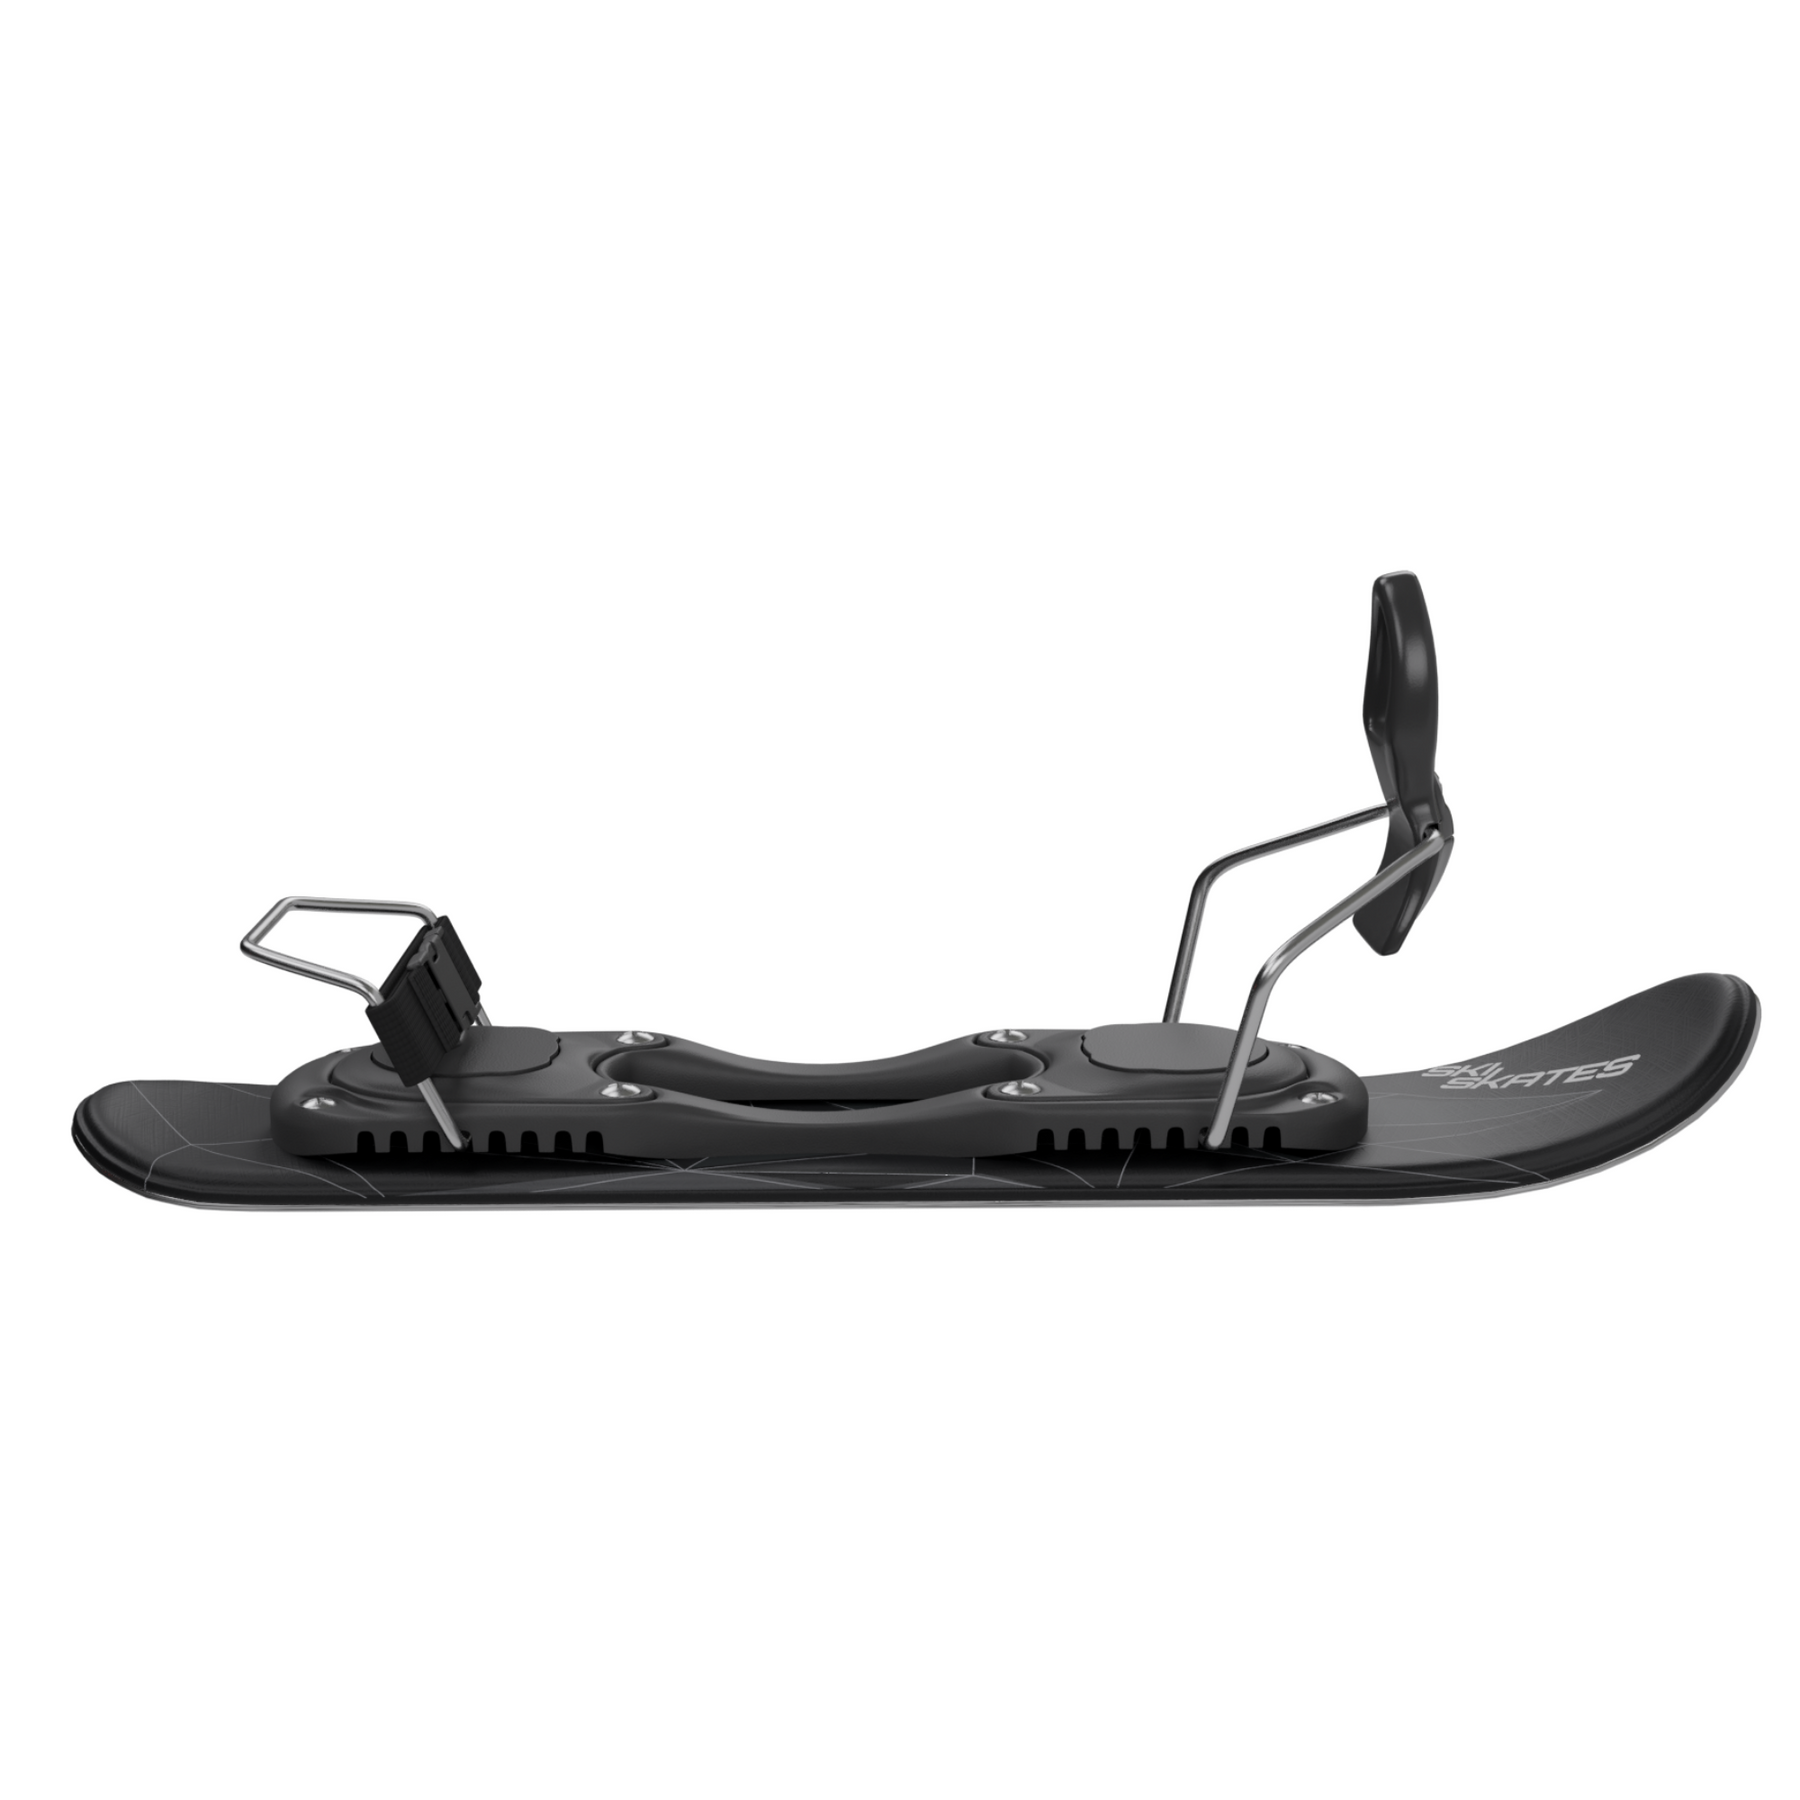 Skiskates - Mini Skis - Official Website - Reviews | Price $299.90 ...